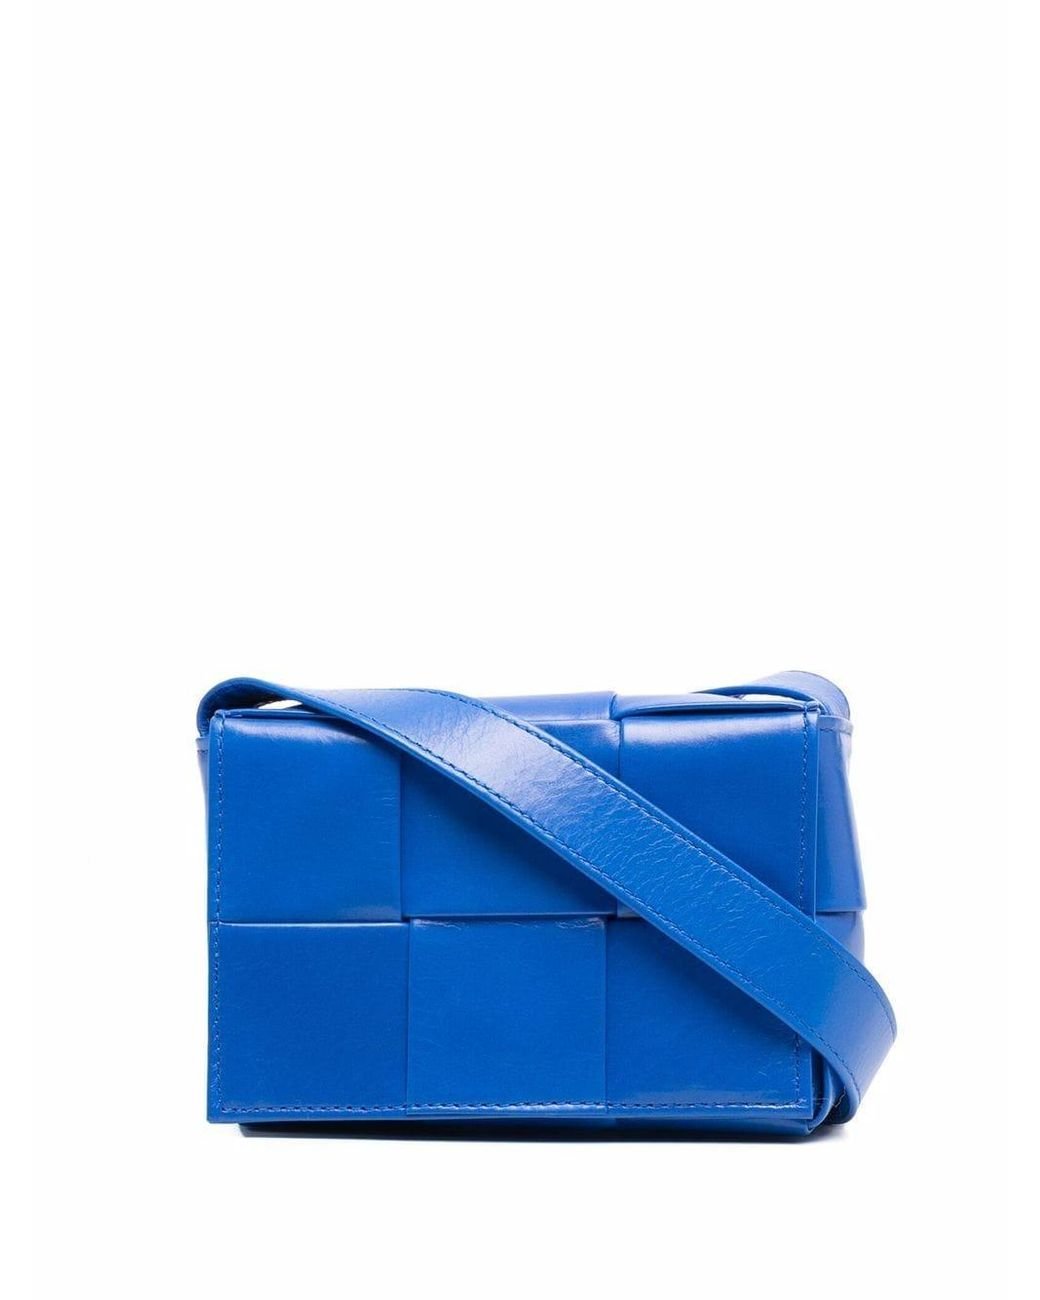 Bottega Veneta - Cassette Mini leather shoulder bag Bottega Veneta